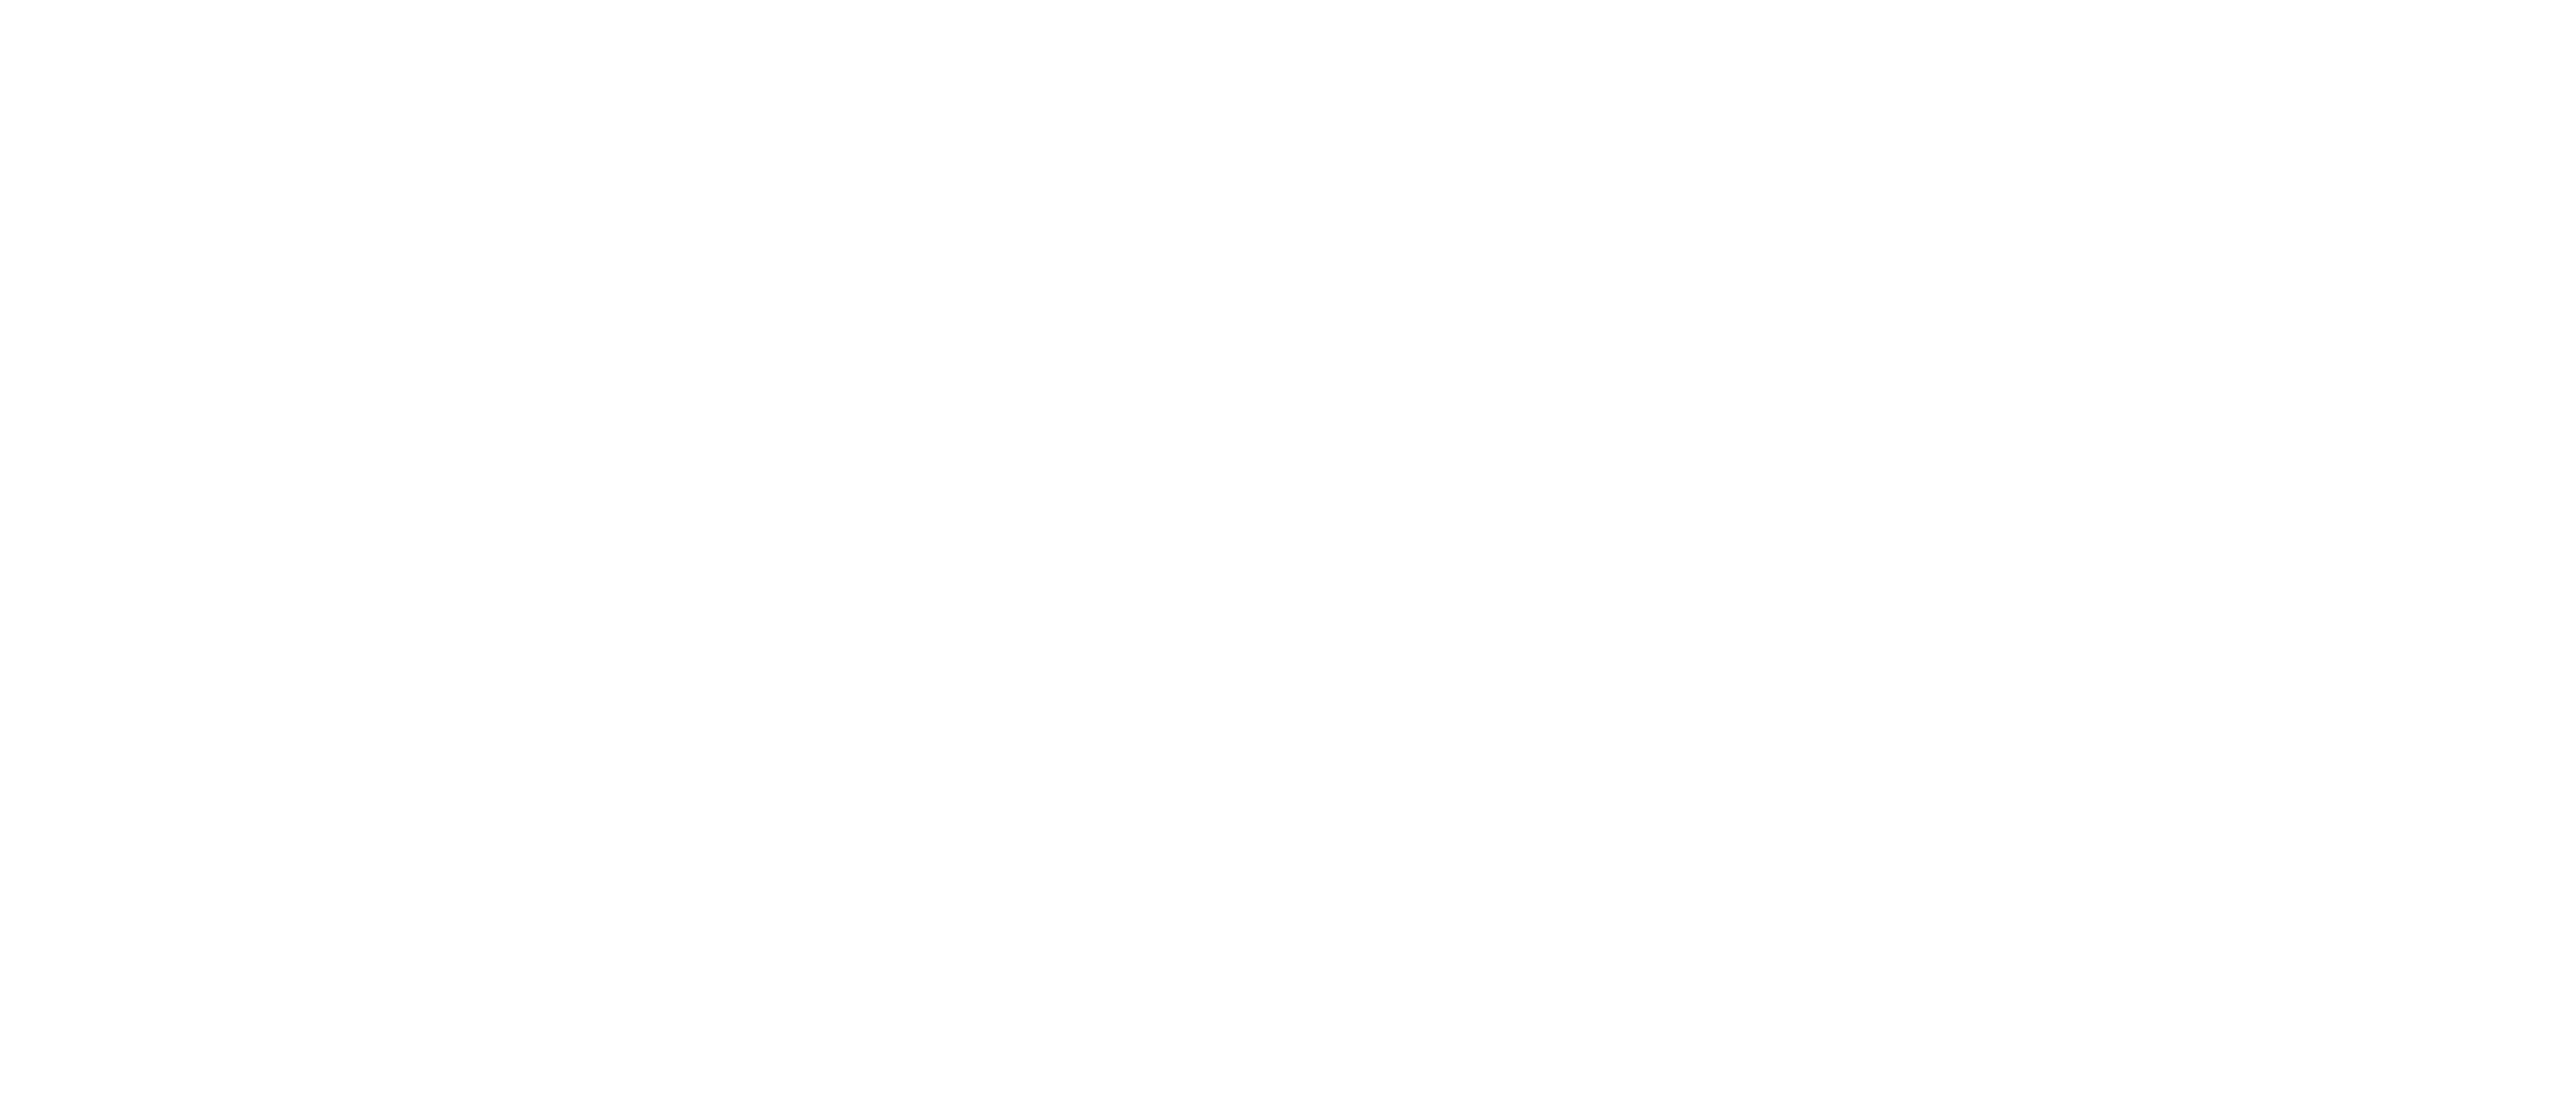 The Ben Nevis Hotel – Strathmore Hotels